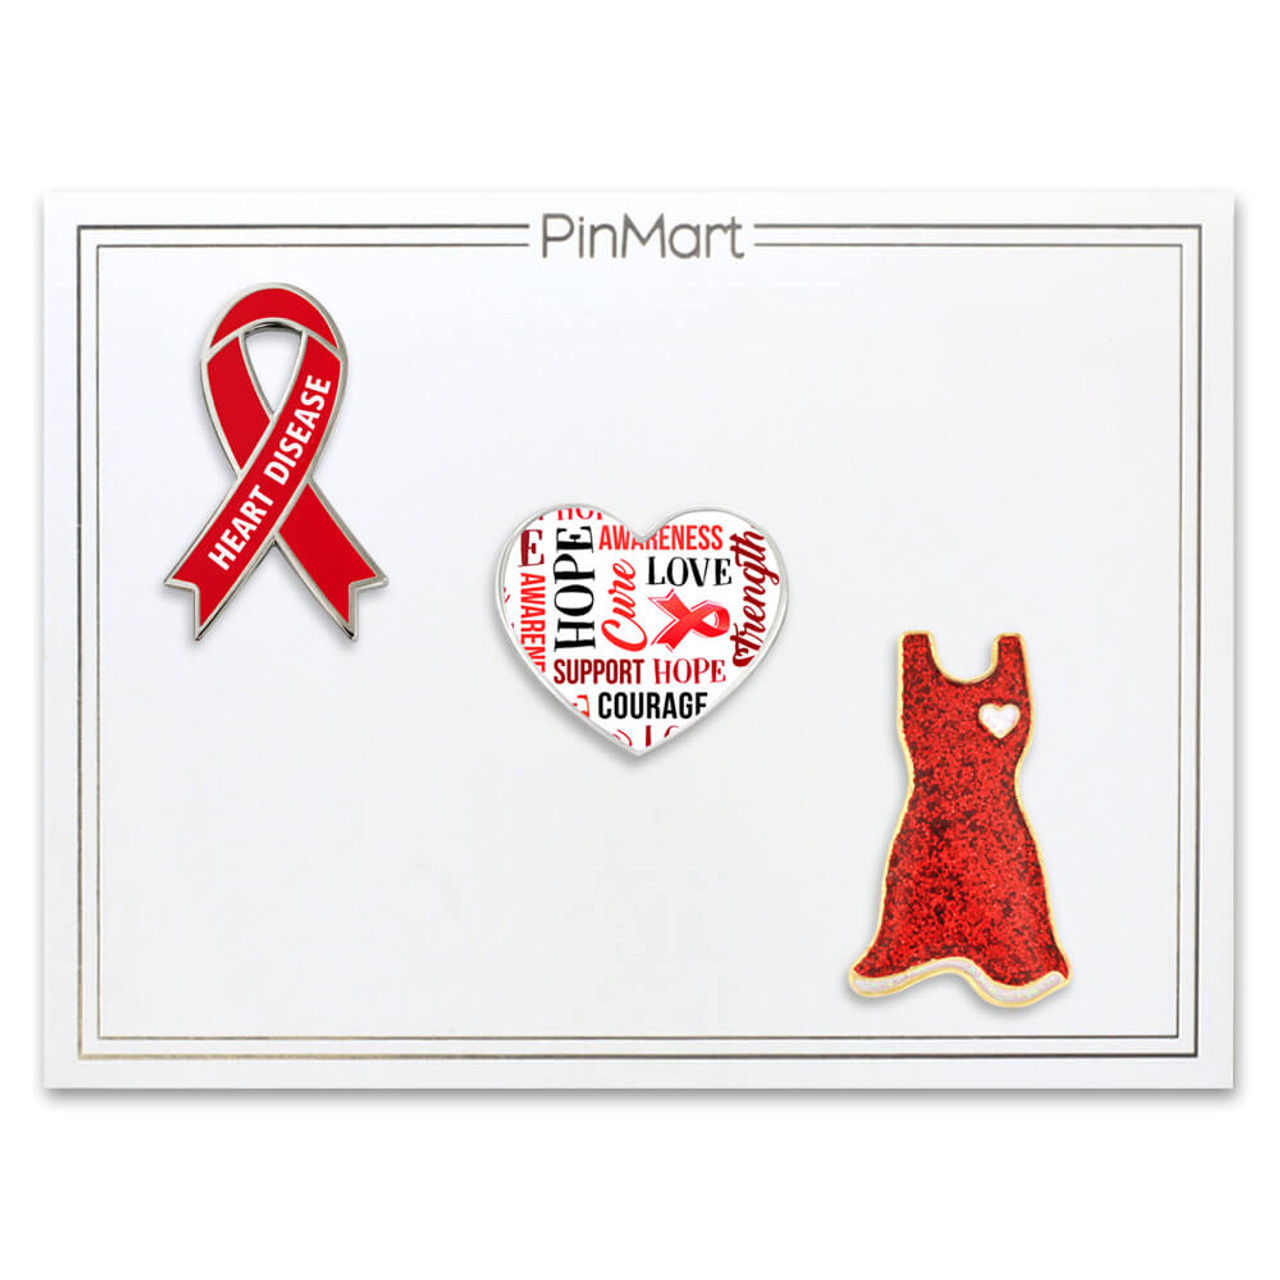 Awareness Ribbon Pin - Heart Disease